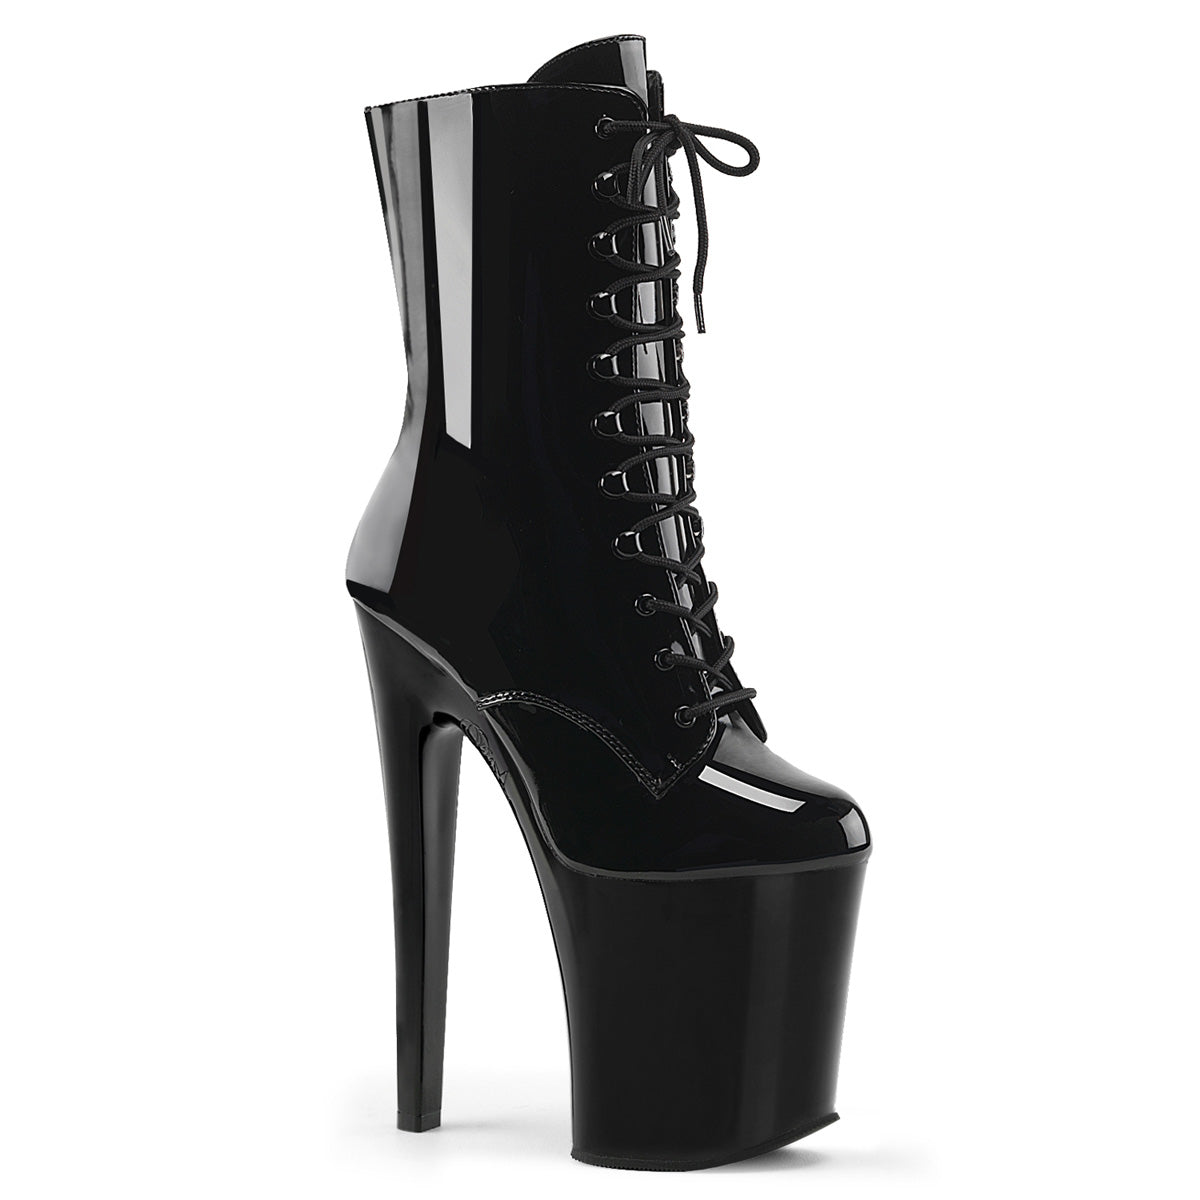 XTREME-1020 Black/Black Boots